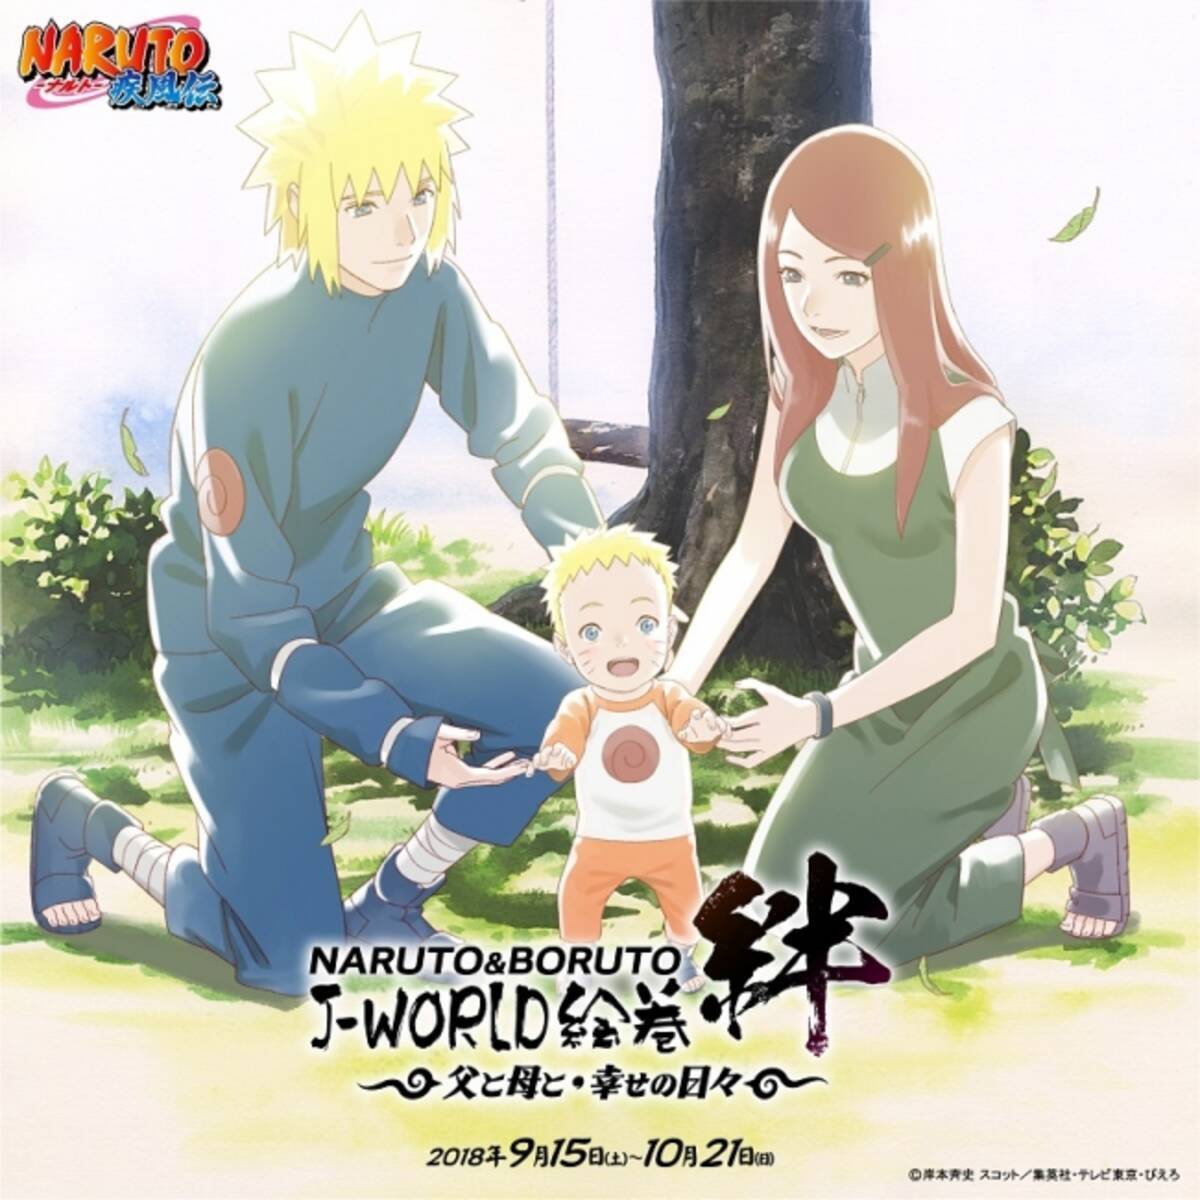 Naruto Boruto J World絵巻 絆 父と母と 幸せの日々 18年9月15日 土 10月21日 日 18年9月4日 エキサイトニュース 2 5